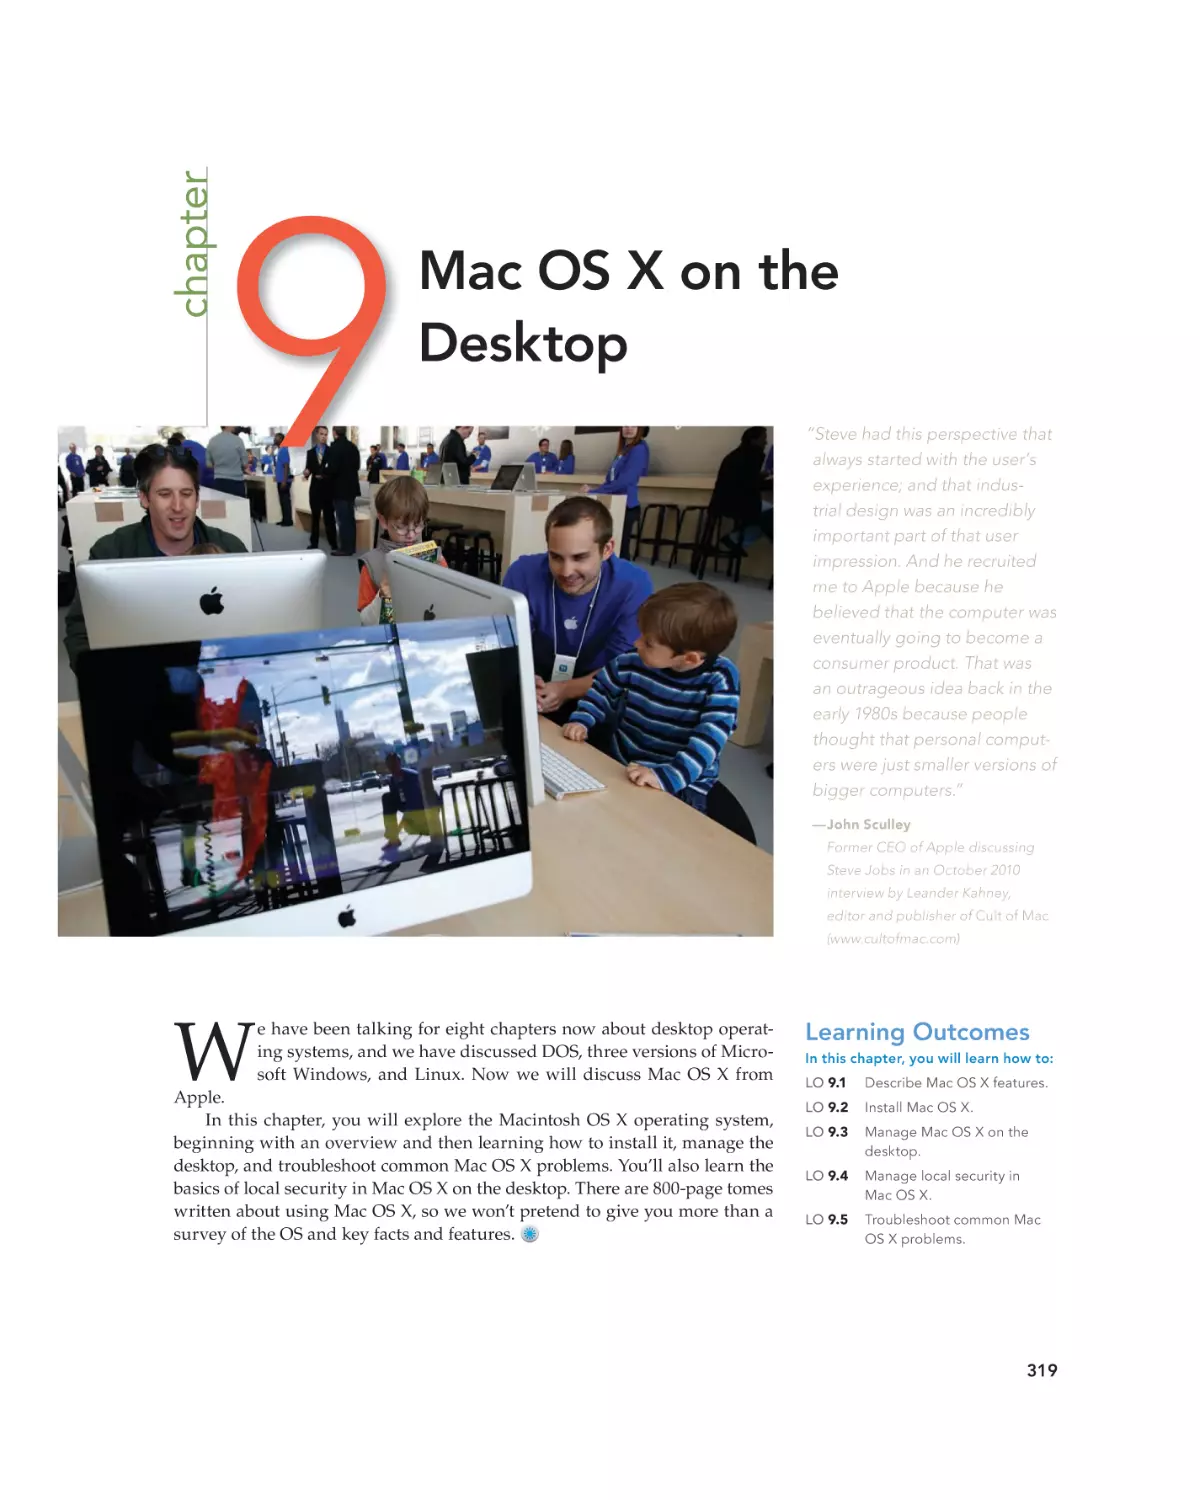 9 Mac OS X on the Desktop